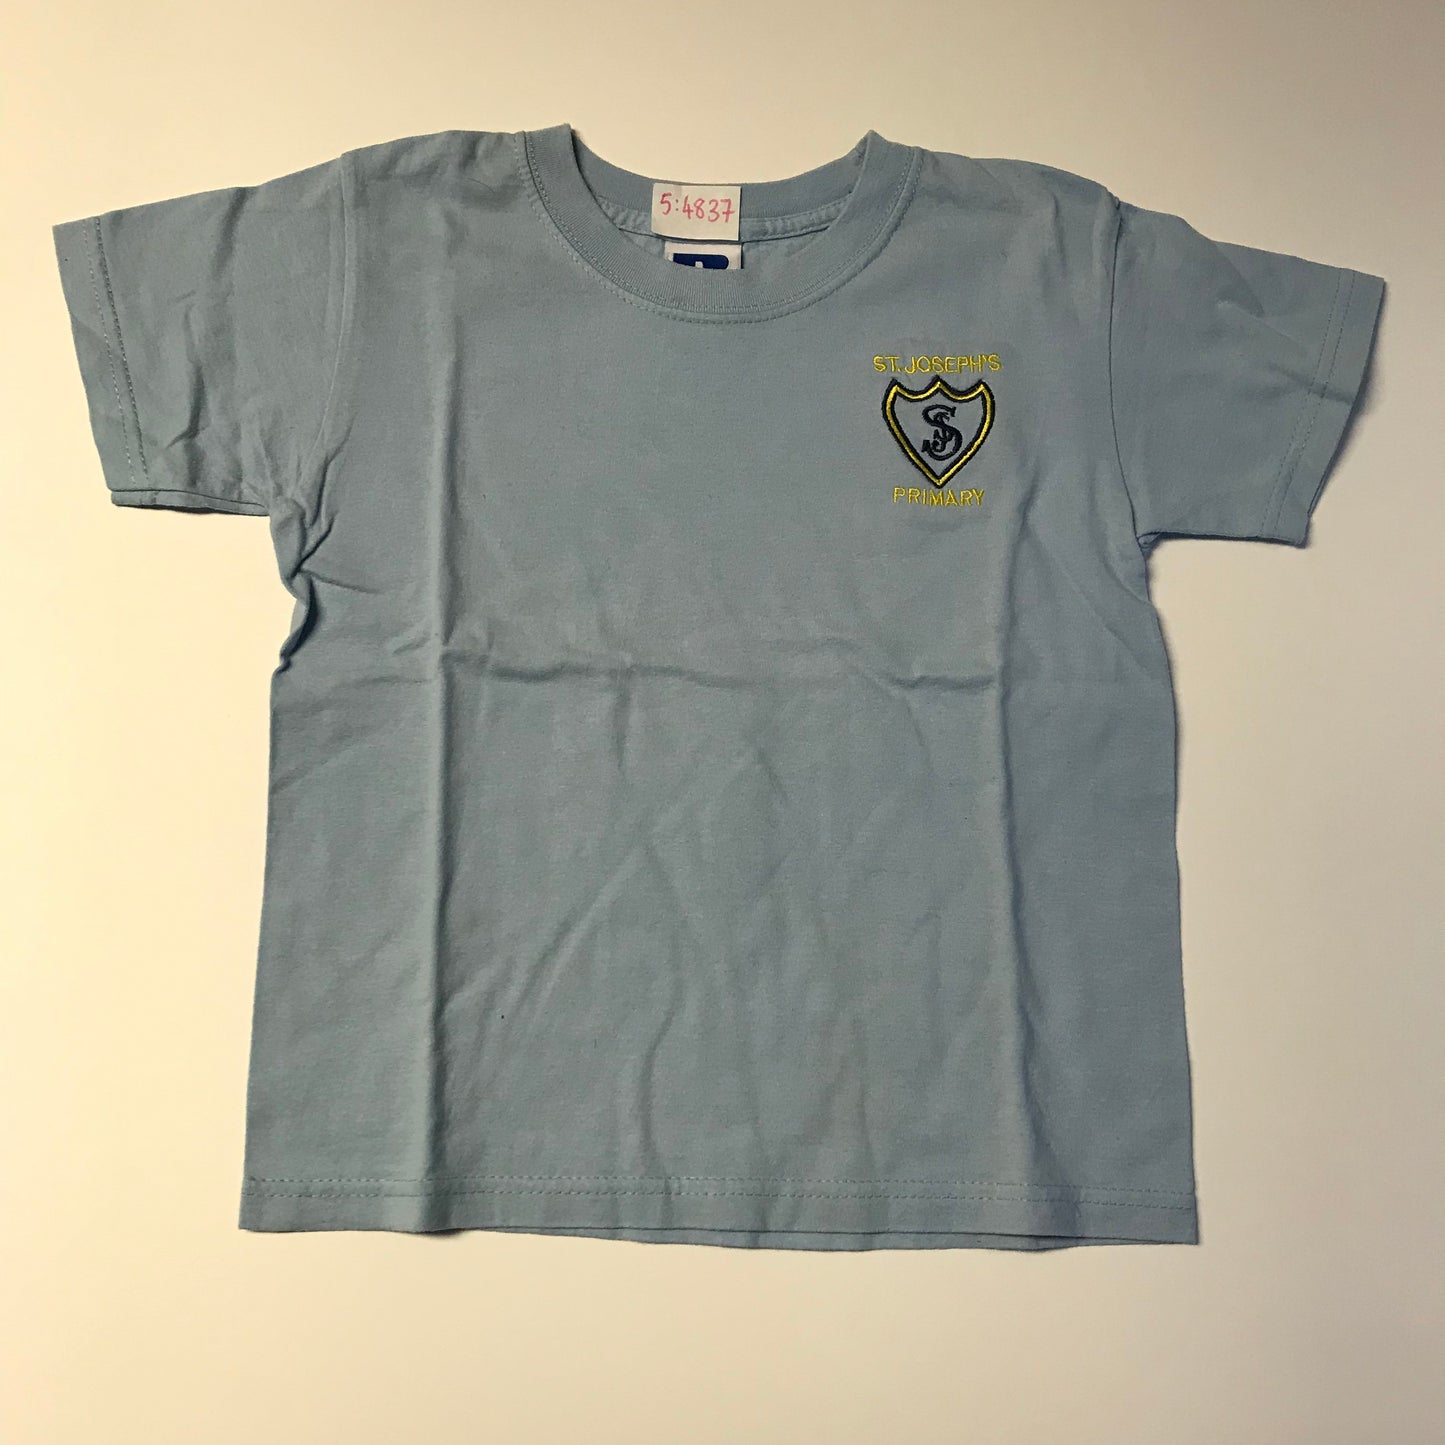 St. Joseph's Primary Light Blue Gym T-shirt